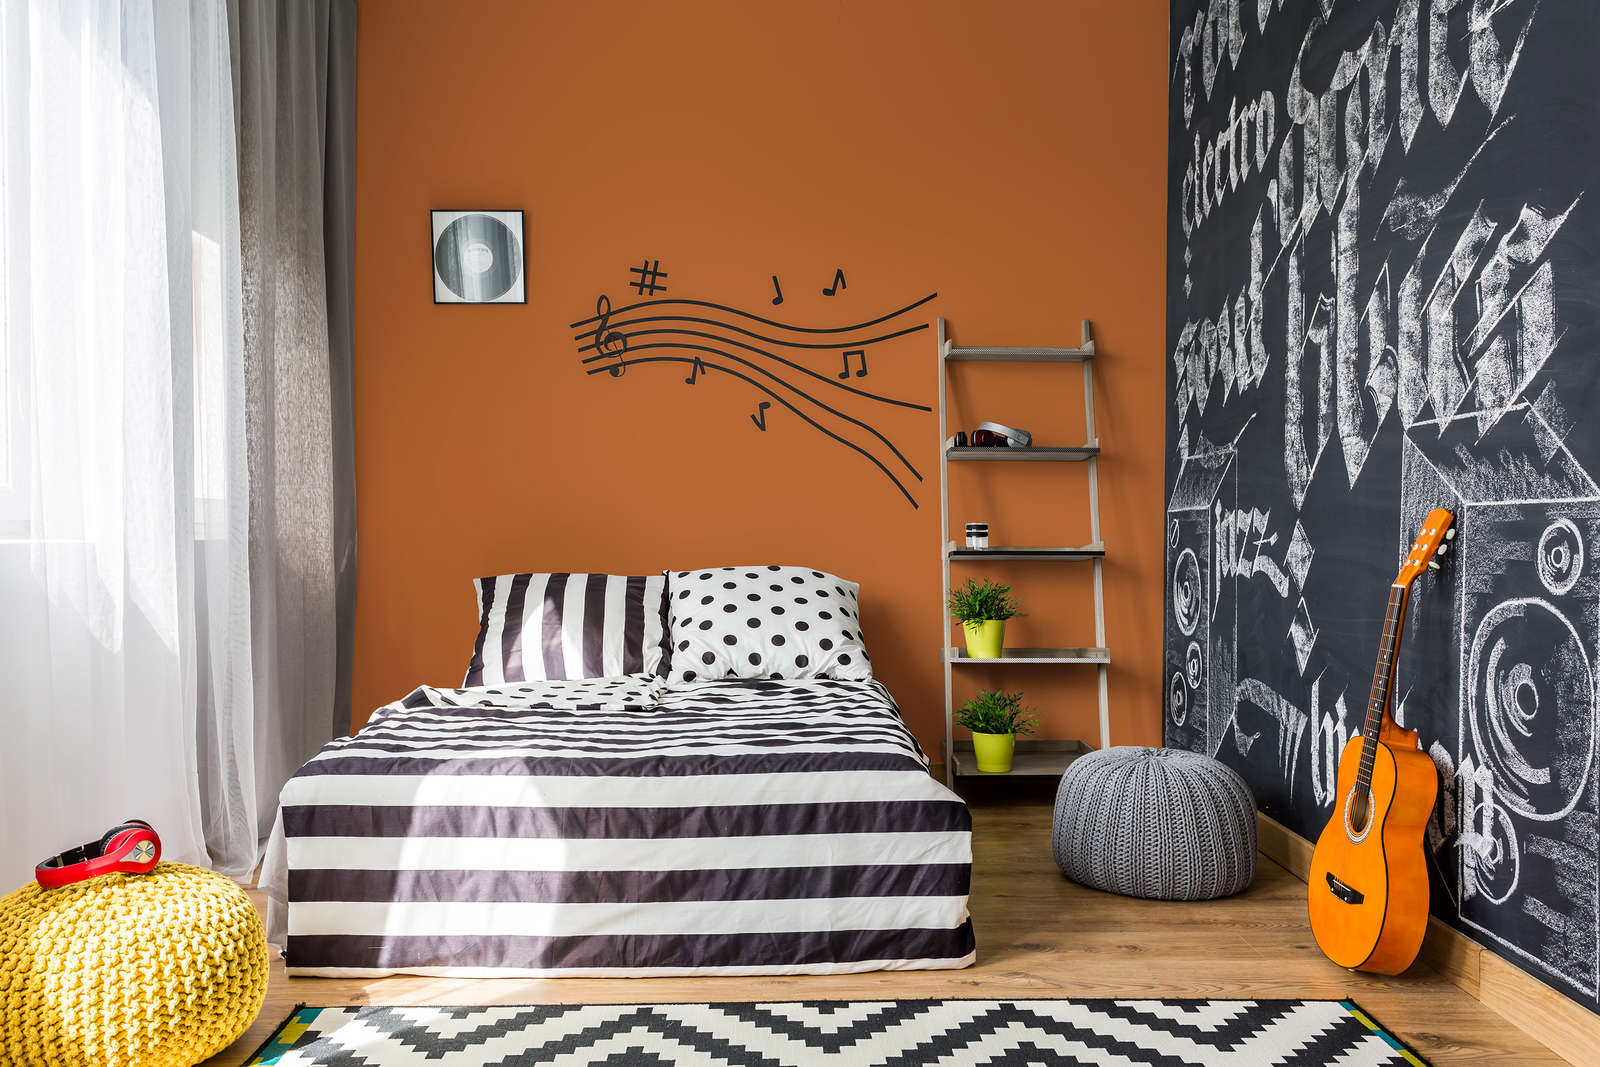             Premium Wall Paint Warm Orange »Pretty Peach« NW903 – 5 litre
        